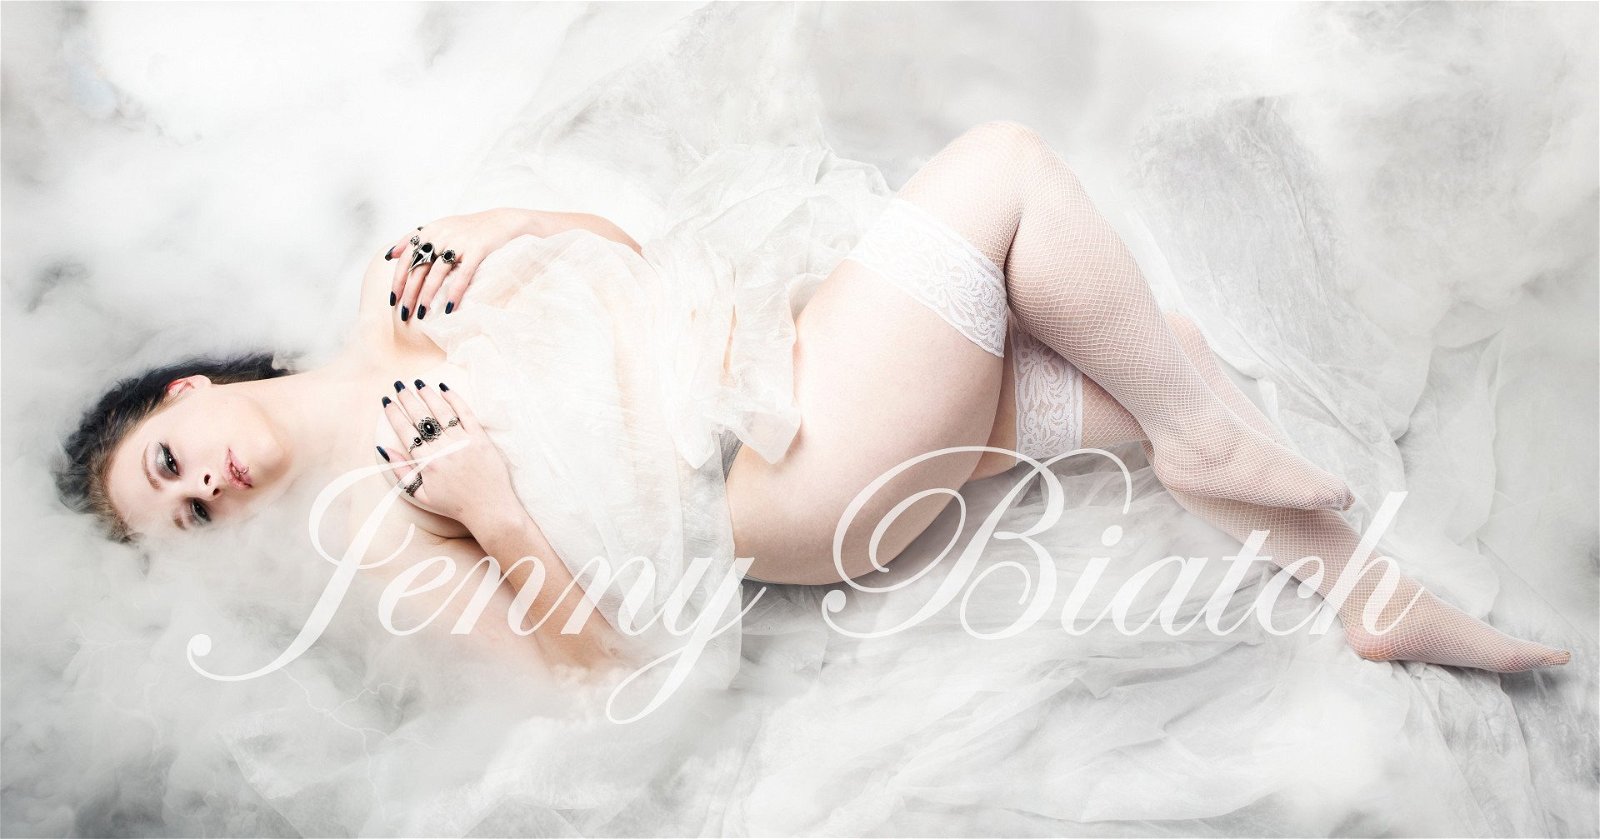 Cover photo of JennyBiatch